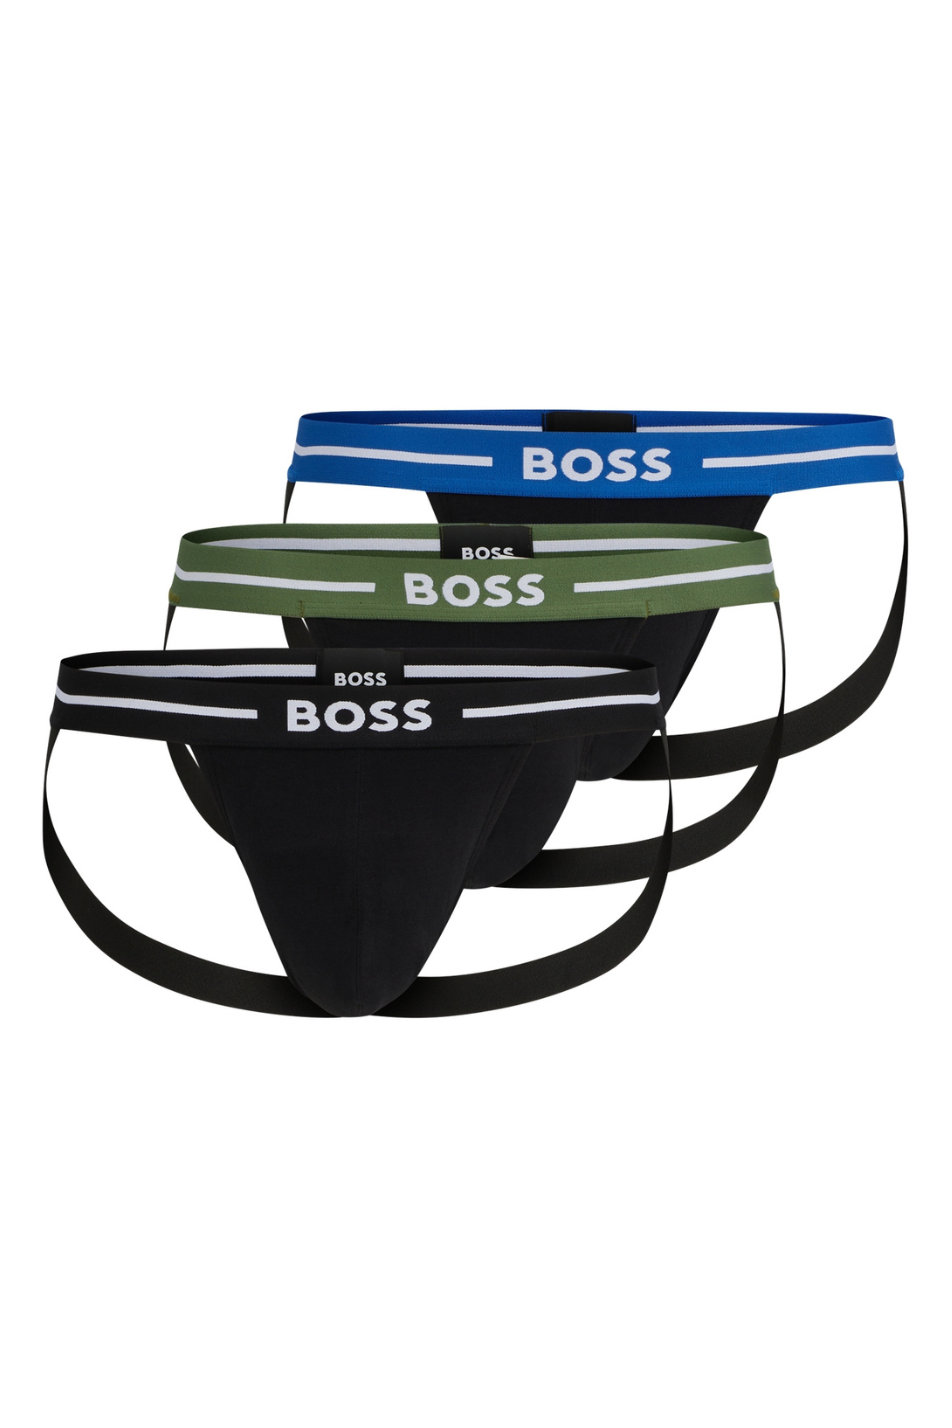 Boss 3 Pack Men's Bold Jockstrap